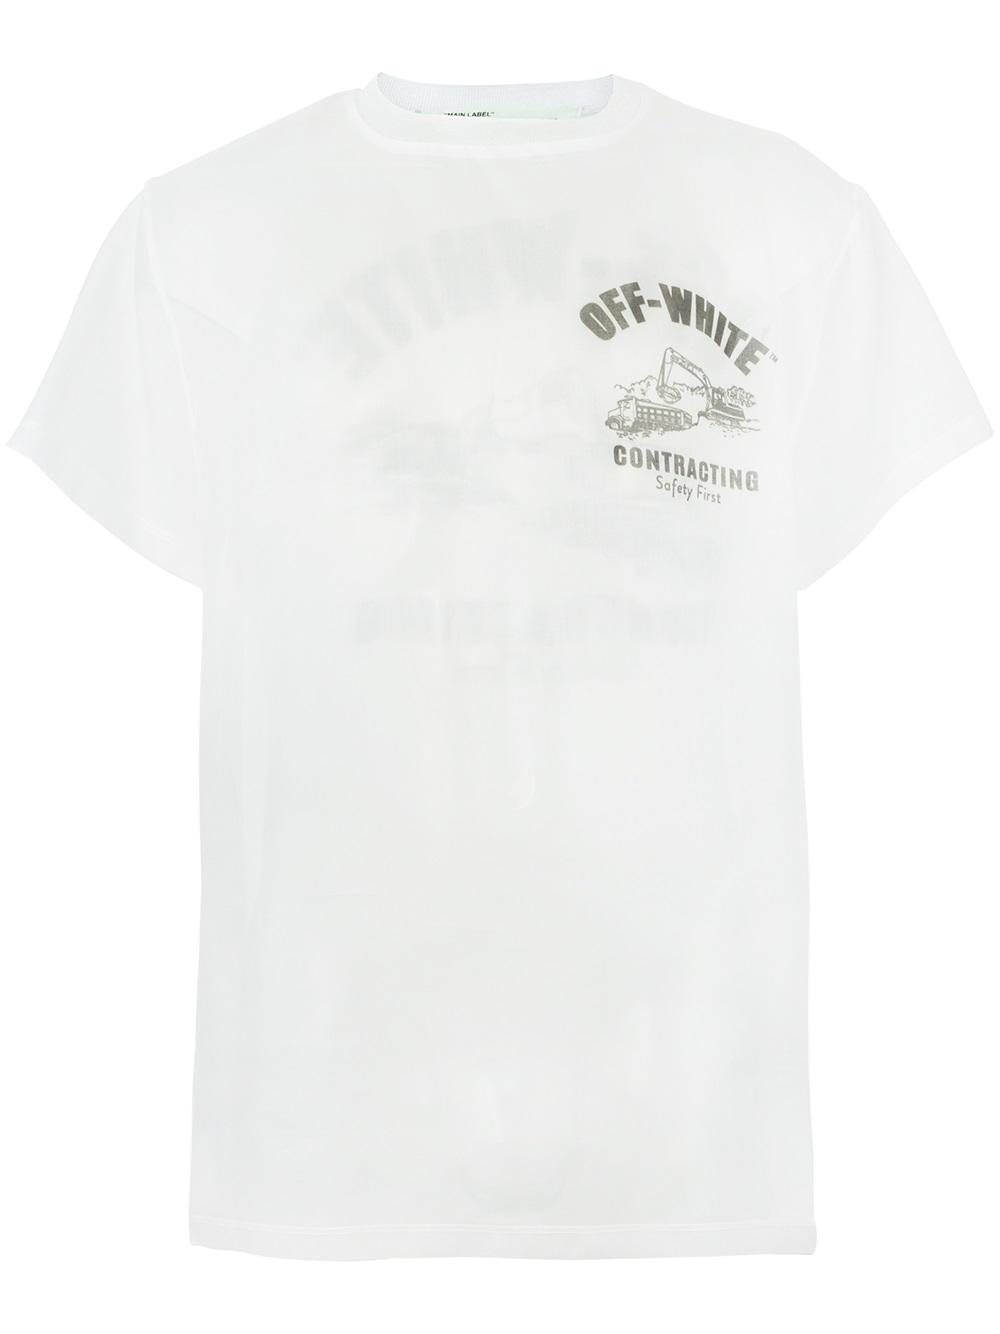 Off-White Construction Organza T-shirt 10110 Men Clothing T-Shirts